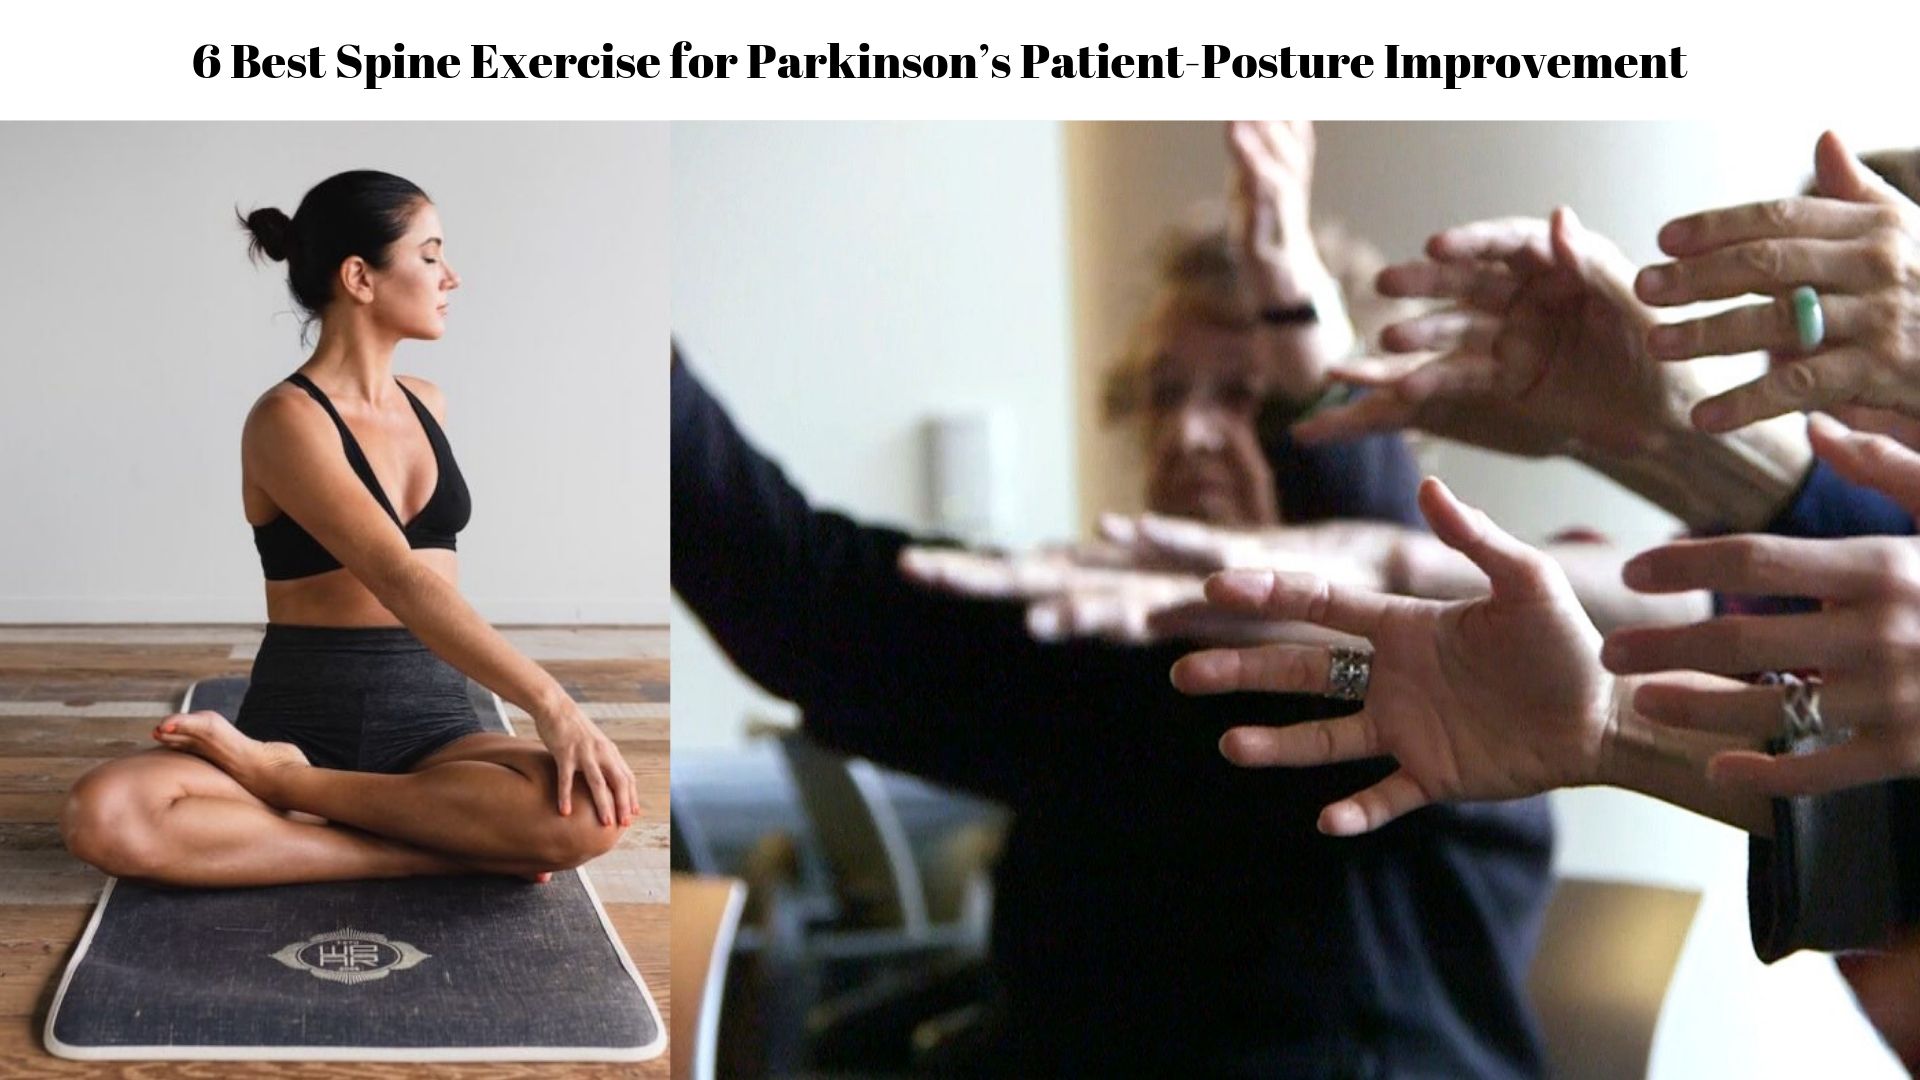 6 Best Spine Exercise for Parkinson’s Patient-Posture Improvement